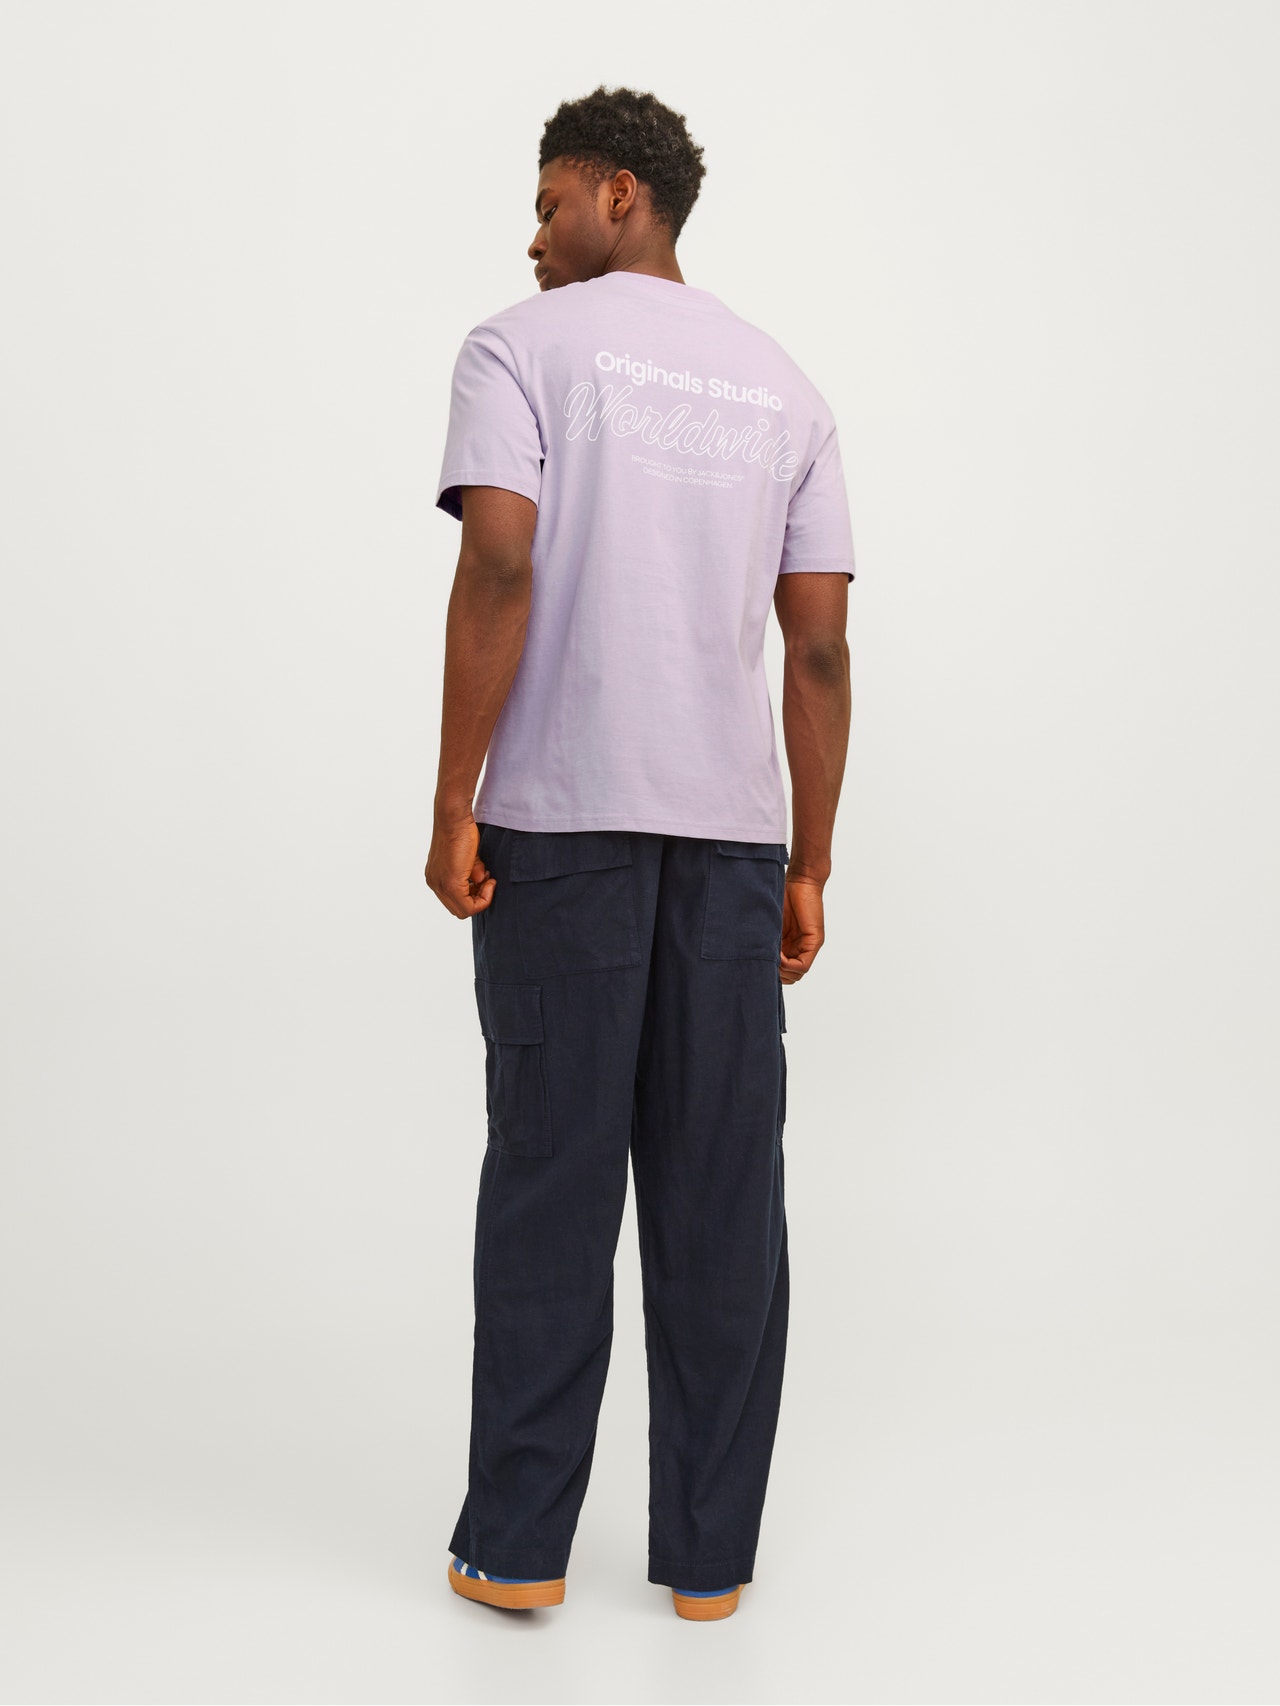 Jack & Jones Printet Crew neck T-shirt -Lavender Frost - 12240122